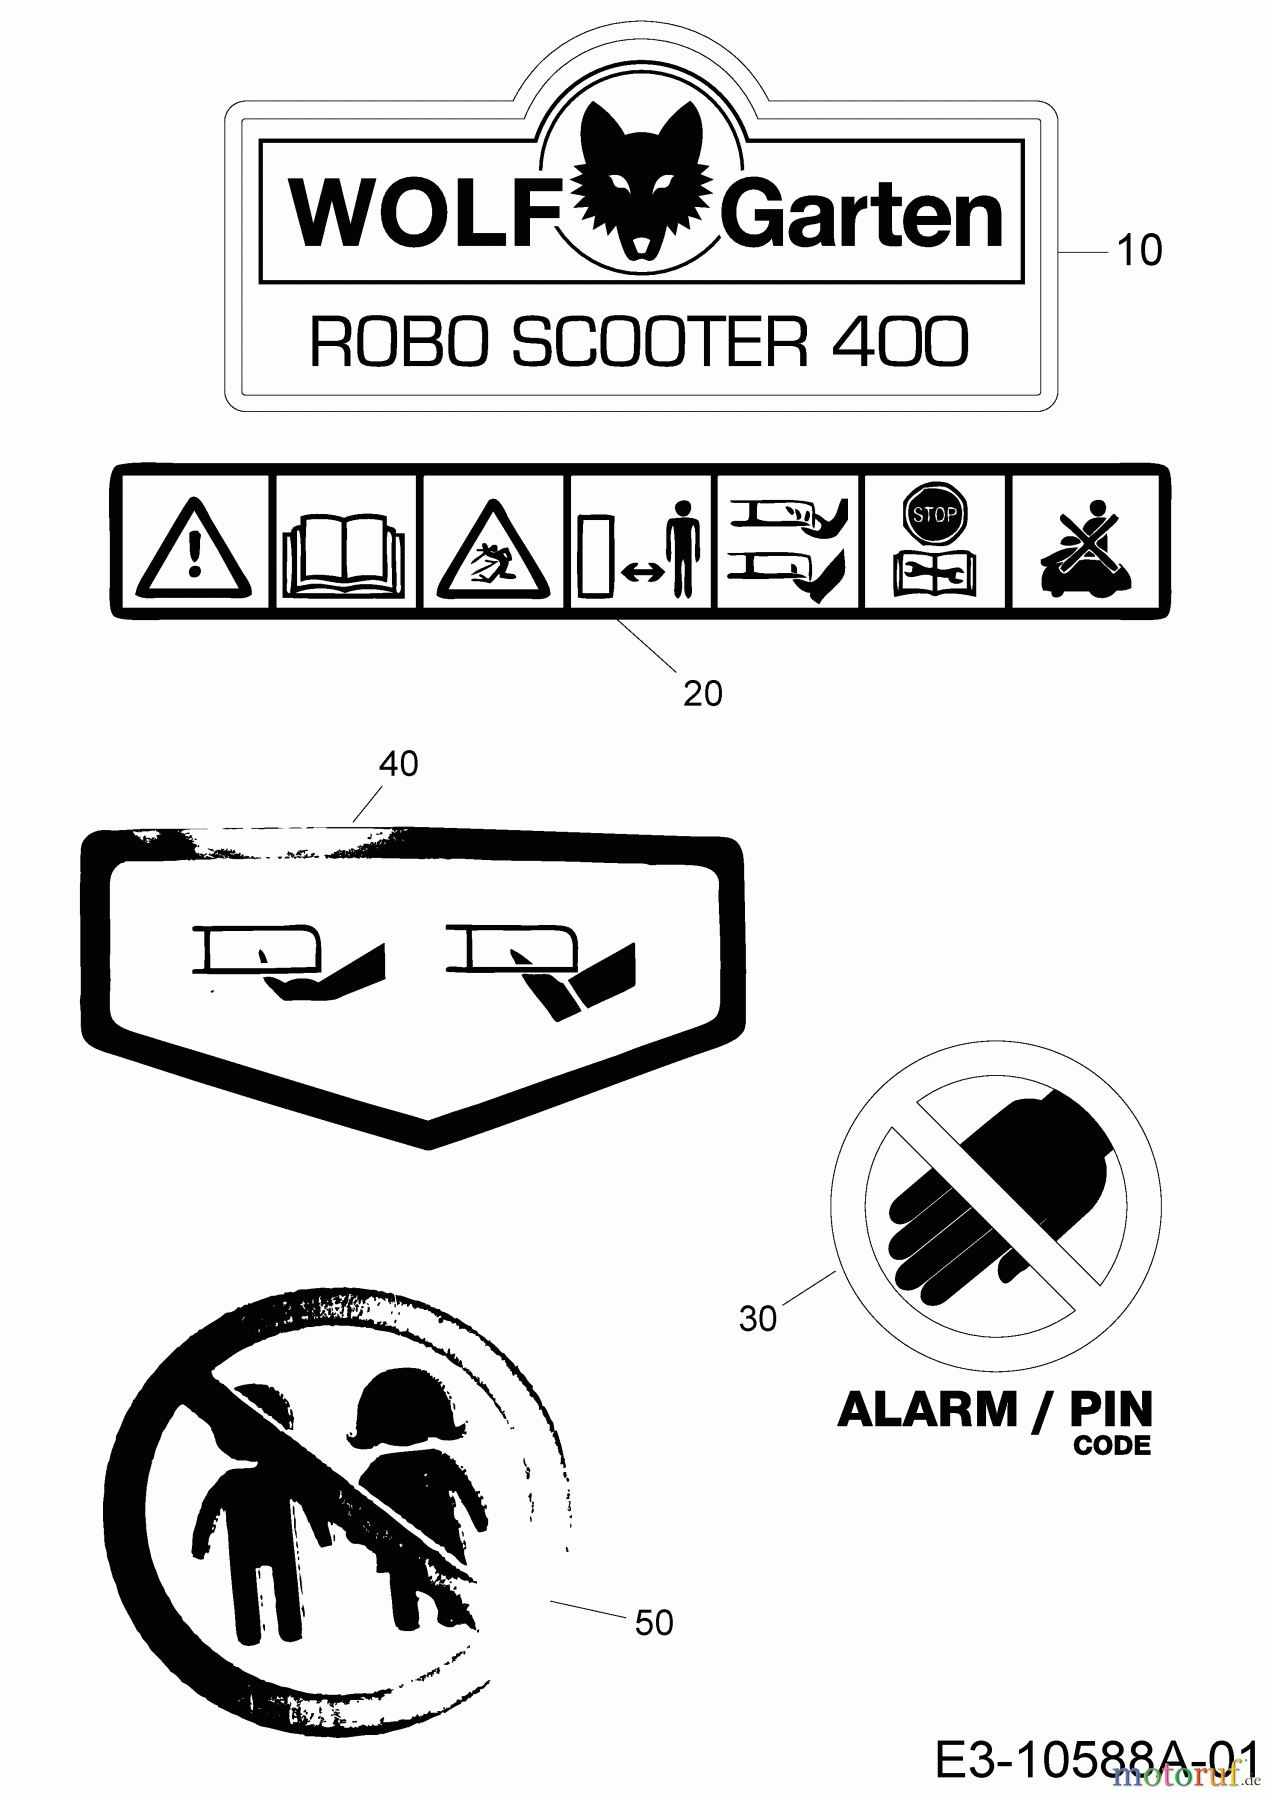  Wolf-Garten Robotic lawn mower Robo Scooter 400 18AO04LF650  (2015) Labels